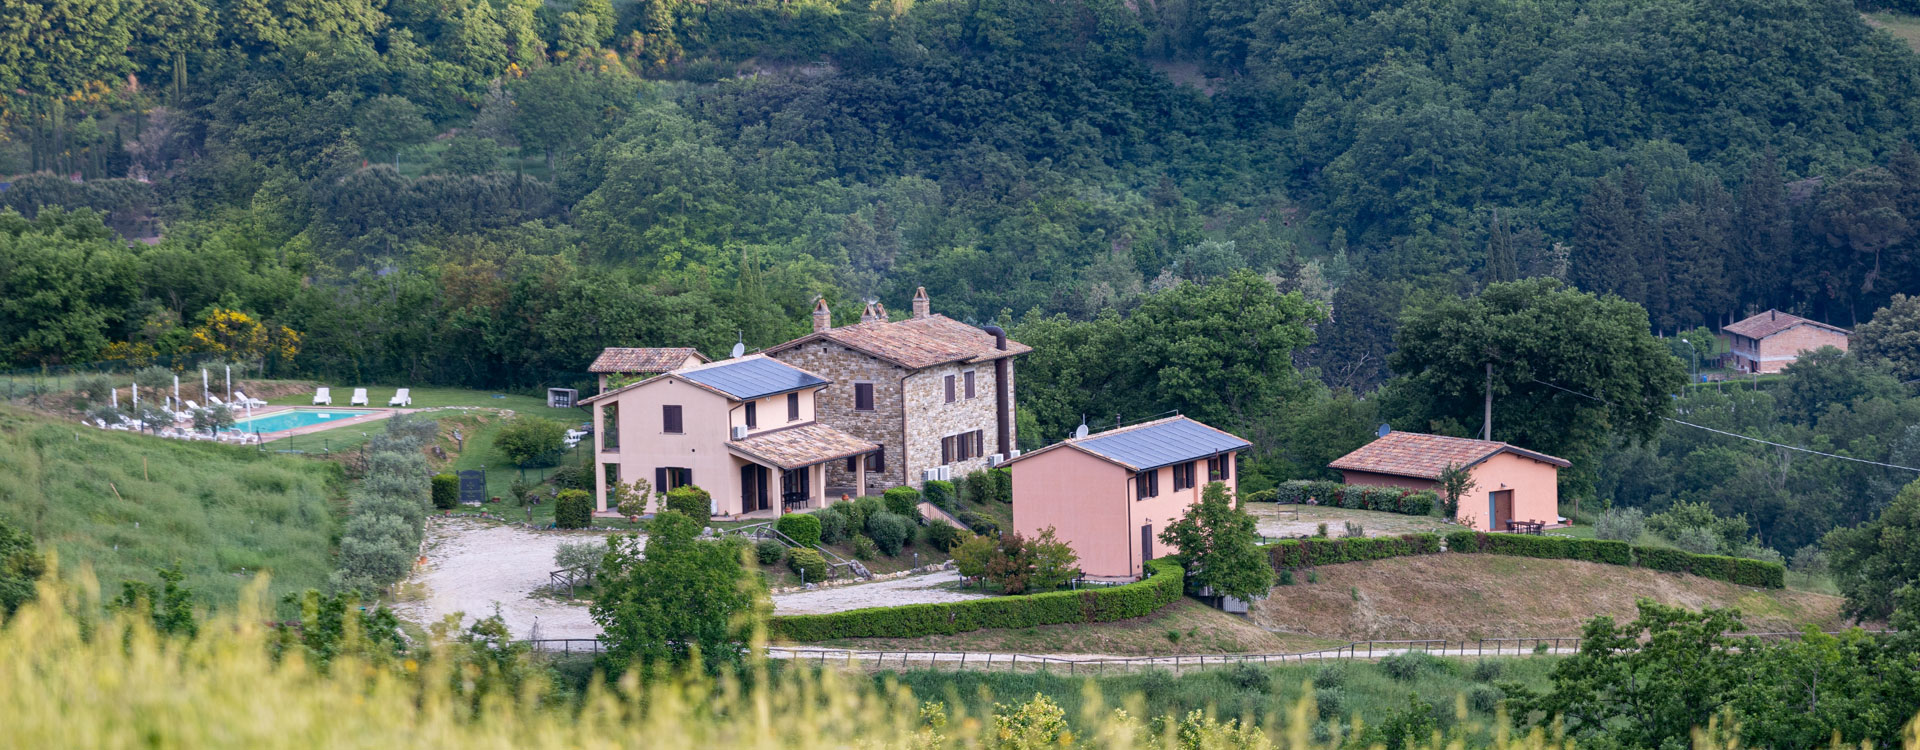 Agriturismo Assisi 'Relais Parco del Subasio' - Foto vetrina 01